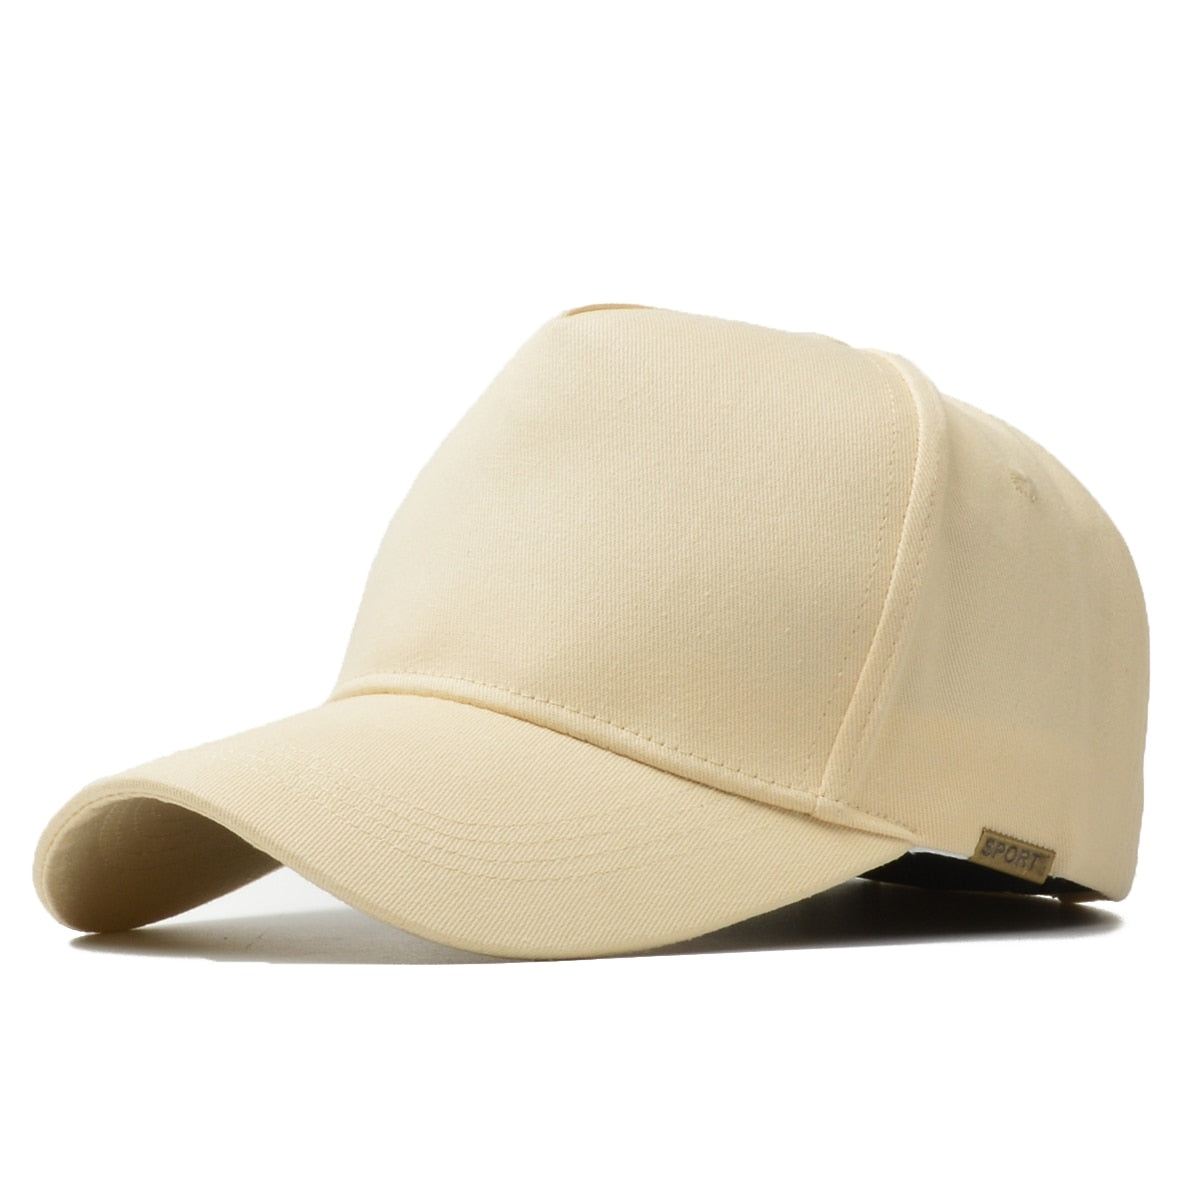 Adjustable Big Size 60-65cm Men's Baseball Cap 5 Panels Cotton Snapback Hat Bones Masculinos Trucker Cap Male